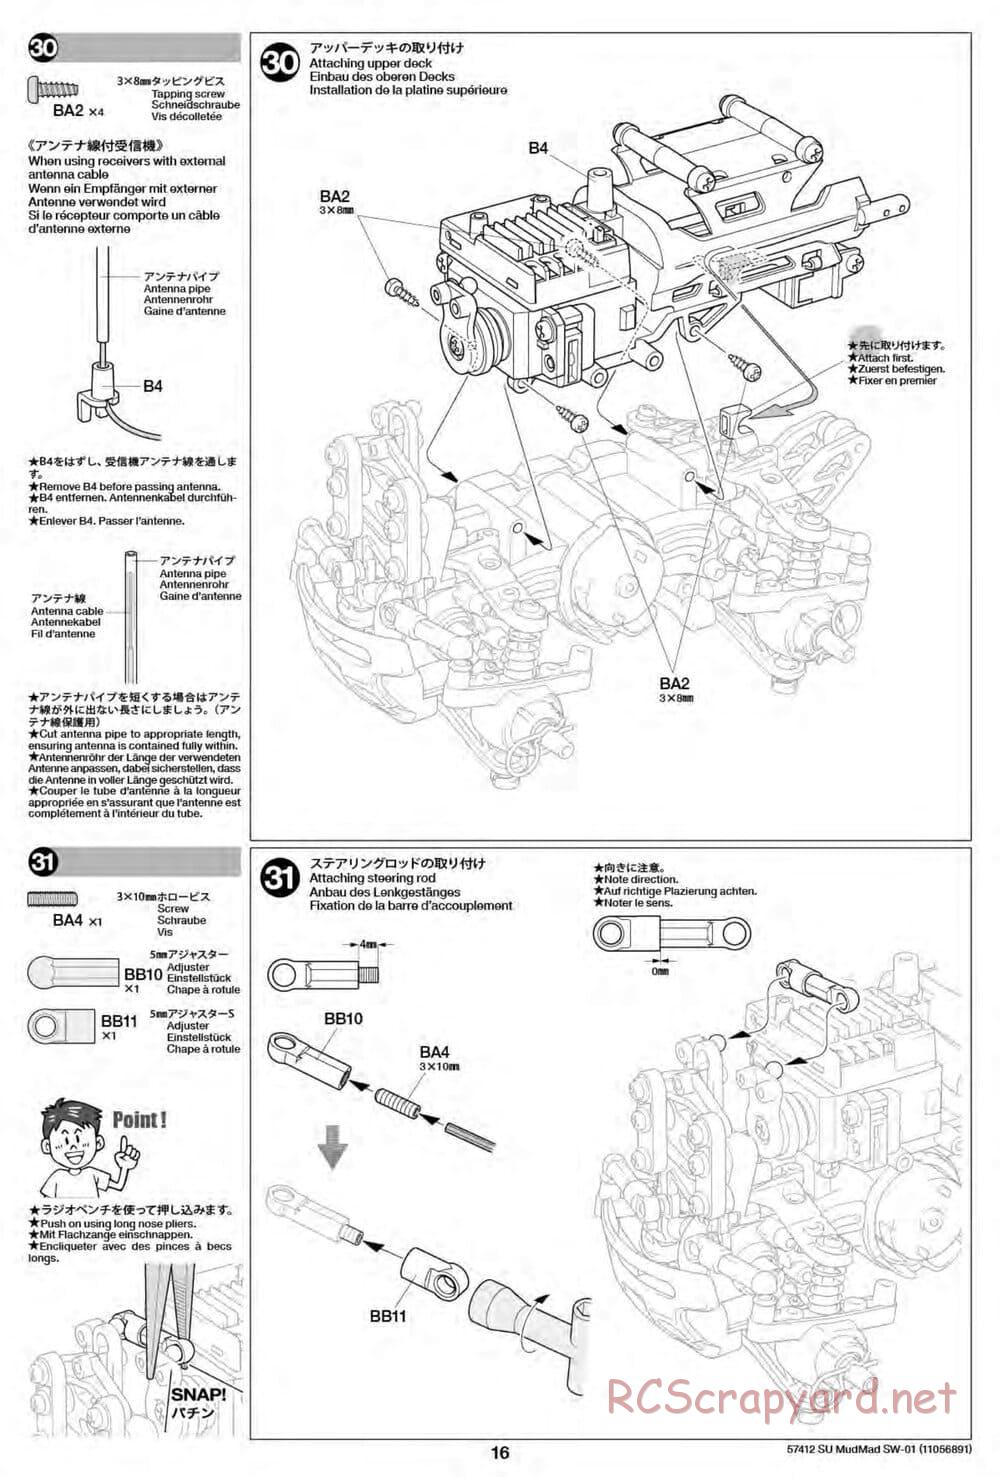 Tamiya - MudMad - SW-01 Chassis - Manual - Page 16